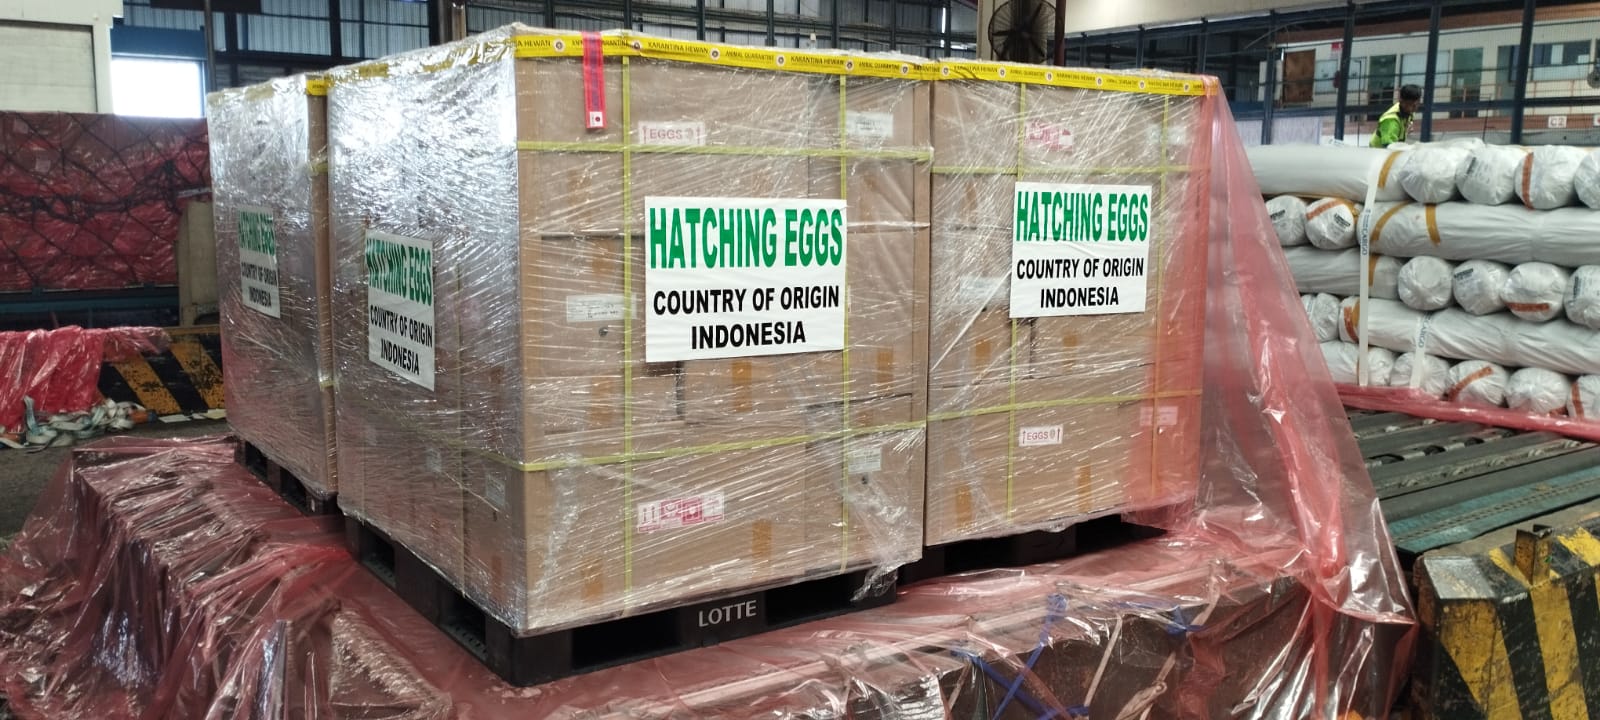 Perdana, Indonesia Berhasil Tembus Ekspor Telur Tetas Ayam ke Brunei Darussalam